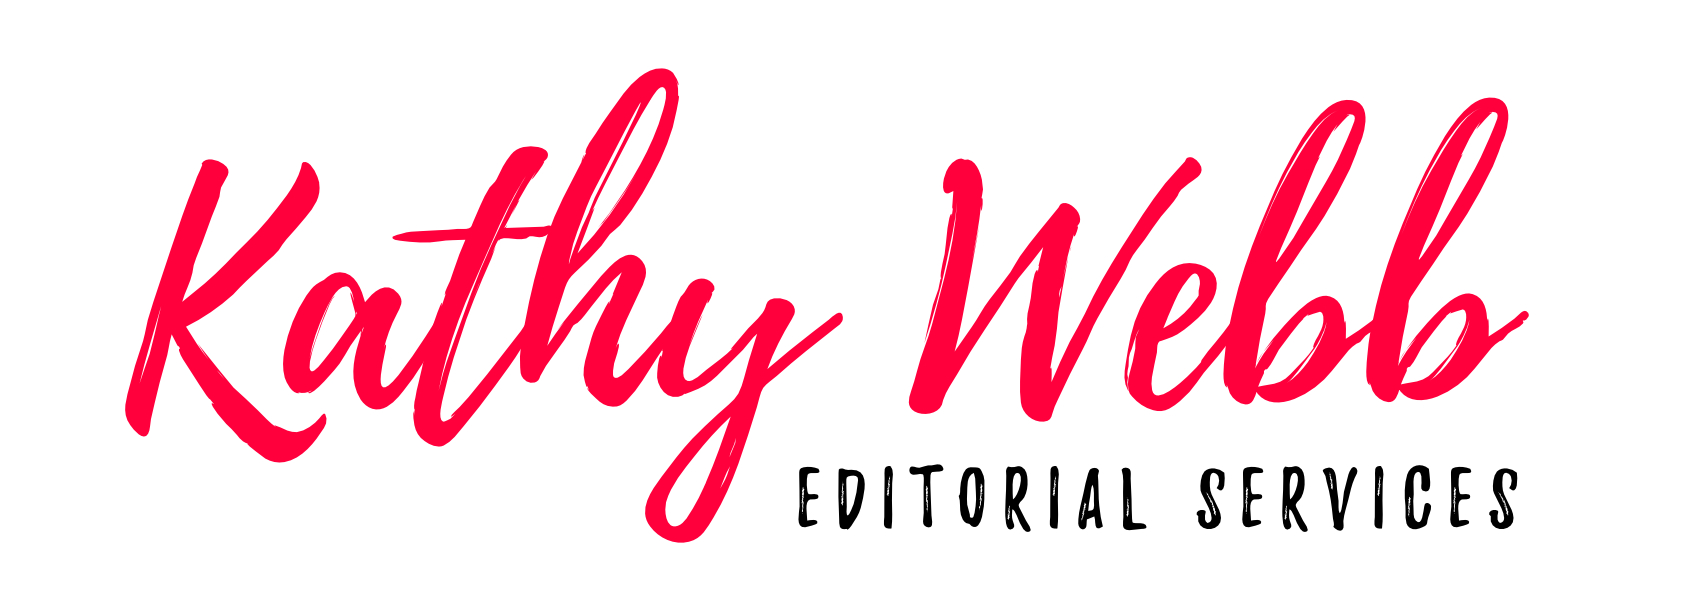 Kathy Webb Editorial Services